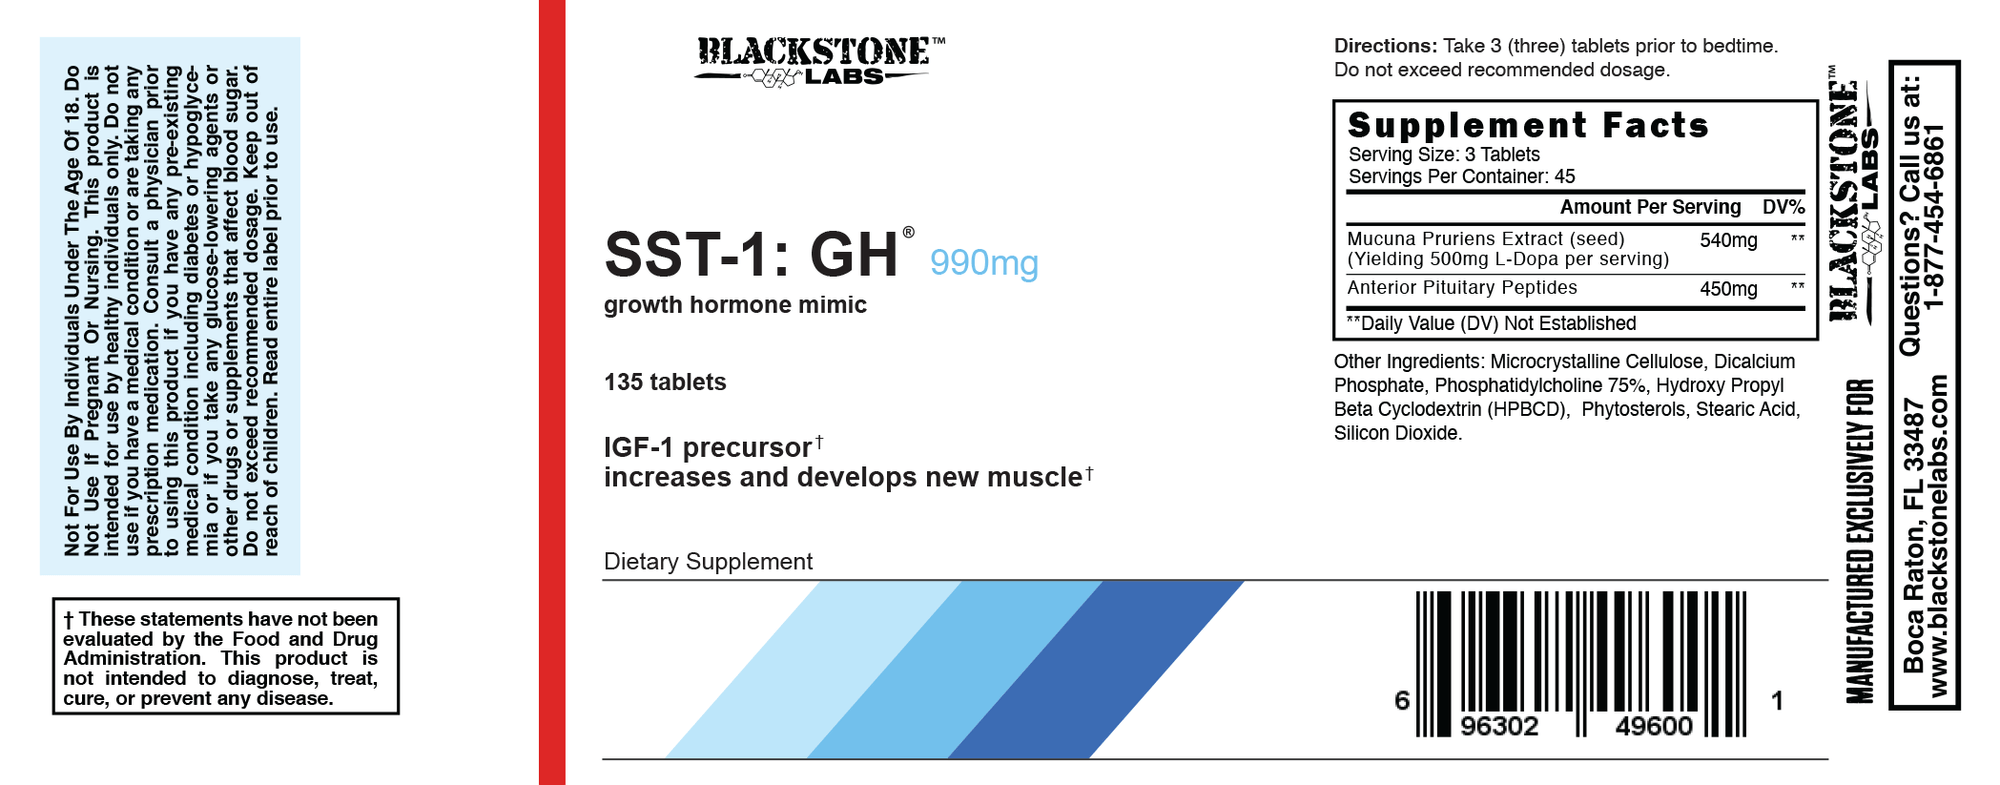 Blackstone Labs SST-1: GH 990mg hechos